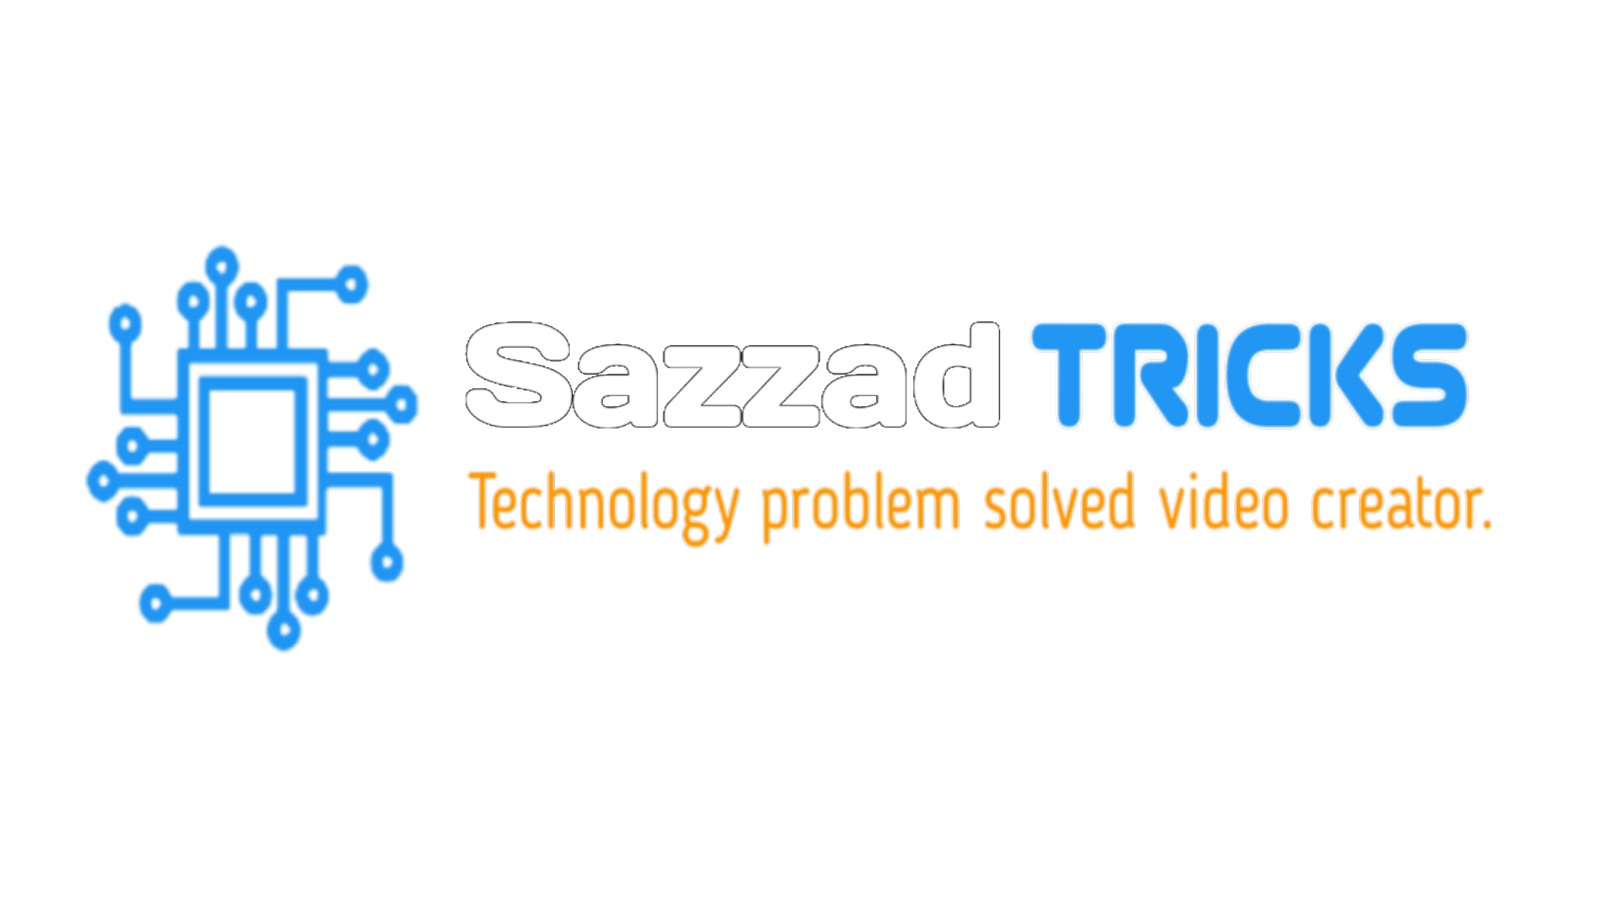 Sazzad Tricks